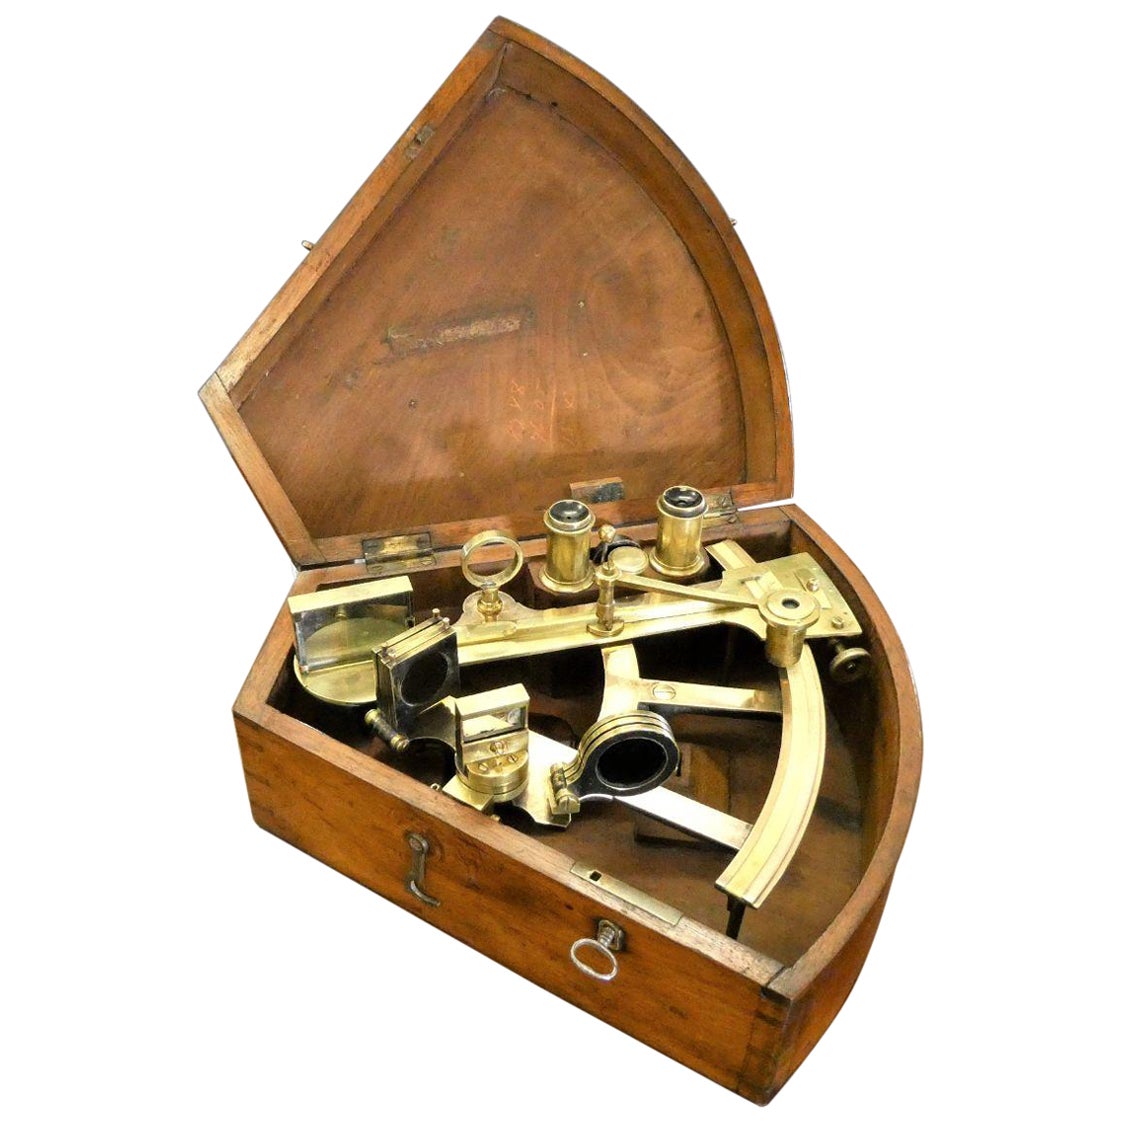 Scott London Brass Sextant Sextant for Mariners Surveyors-Nautical Gifts-Sexton Sailors Art Antique Brass Nautical Sextant Wooden Box-Navigation Nautical Sextant Instrument-C-1679 J 